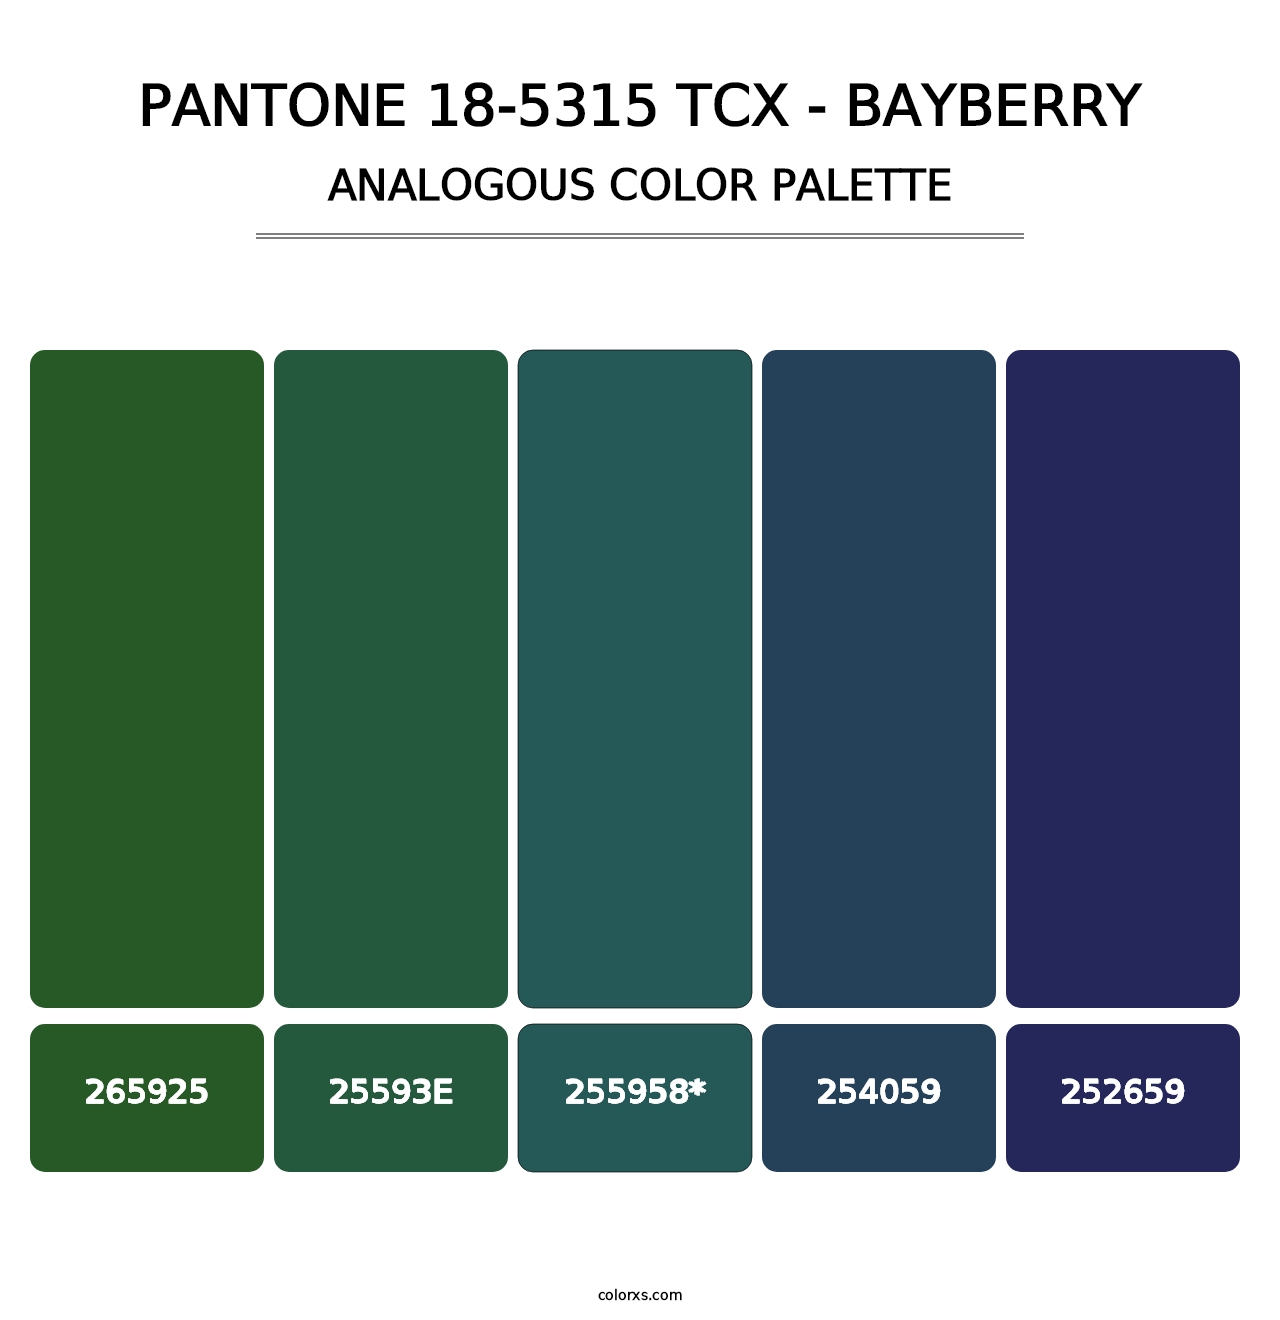 PANTONE 18-5315 TCX - Bayberry - Analogous Color Palette